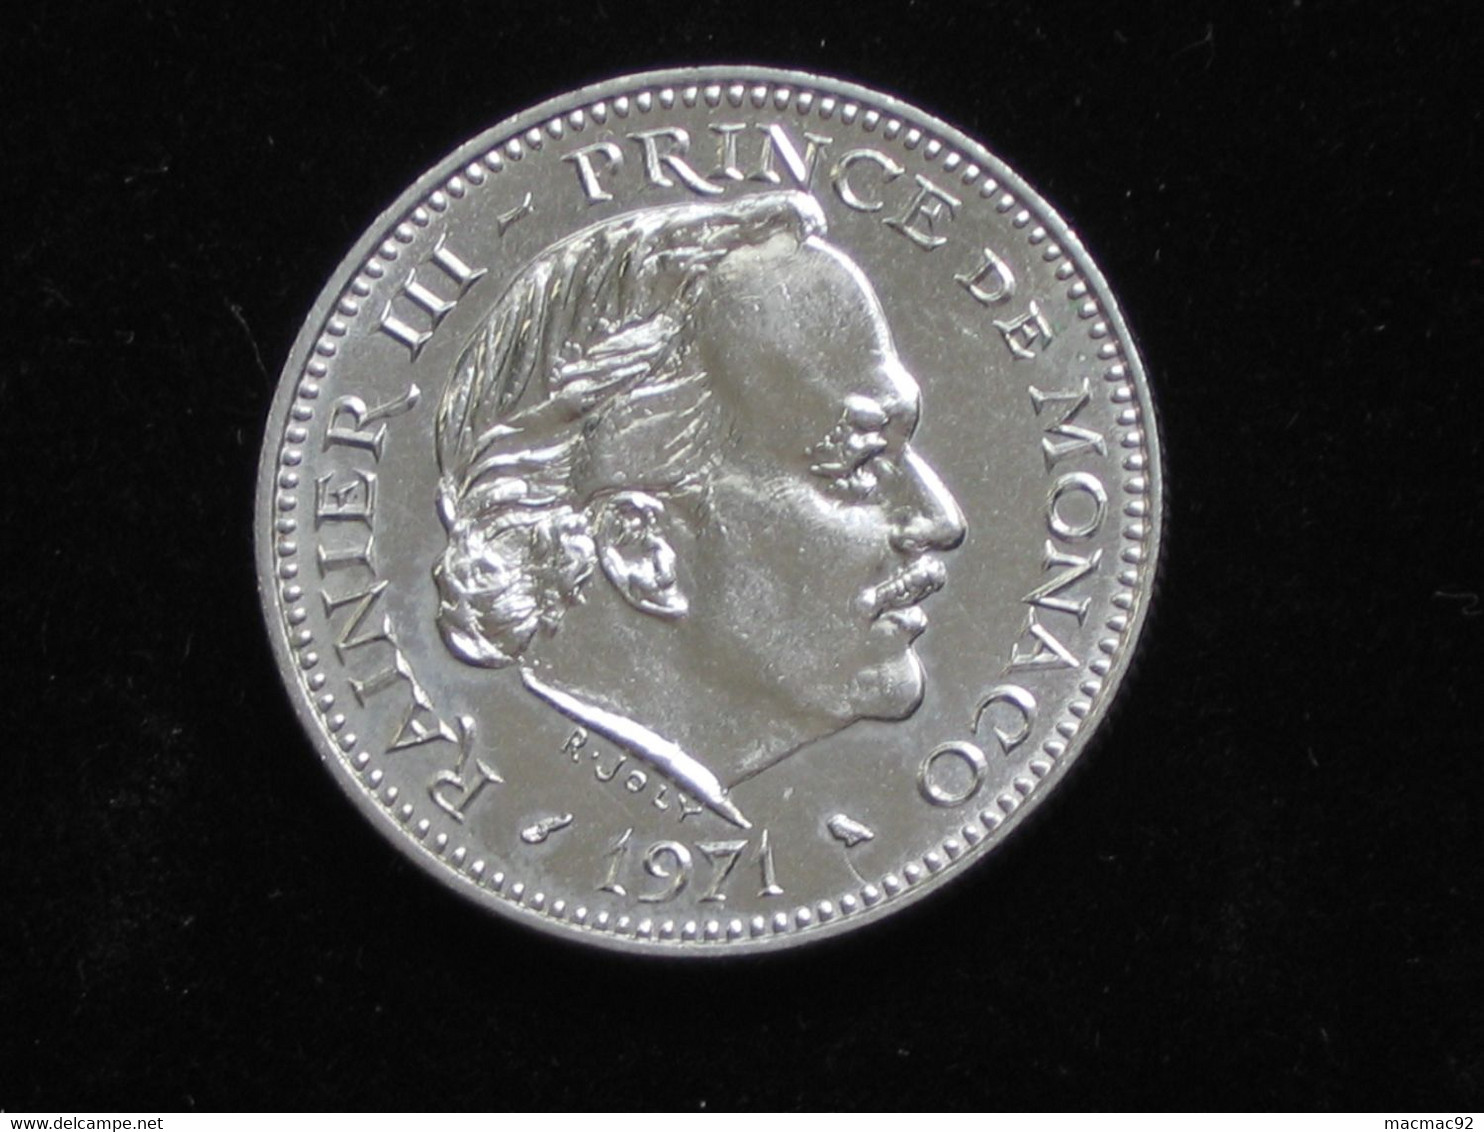 MONACO - 5 Frs 1971 - Rainier III Prince De Monaco **** EN ACHAT IMMEDIAT **** - 1949-1956 Anciens Francs